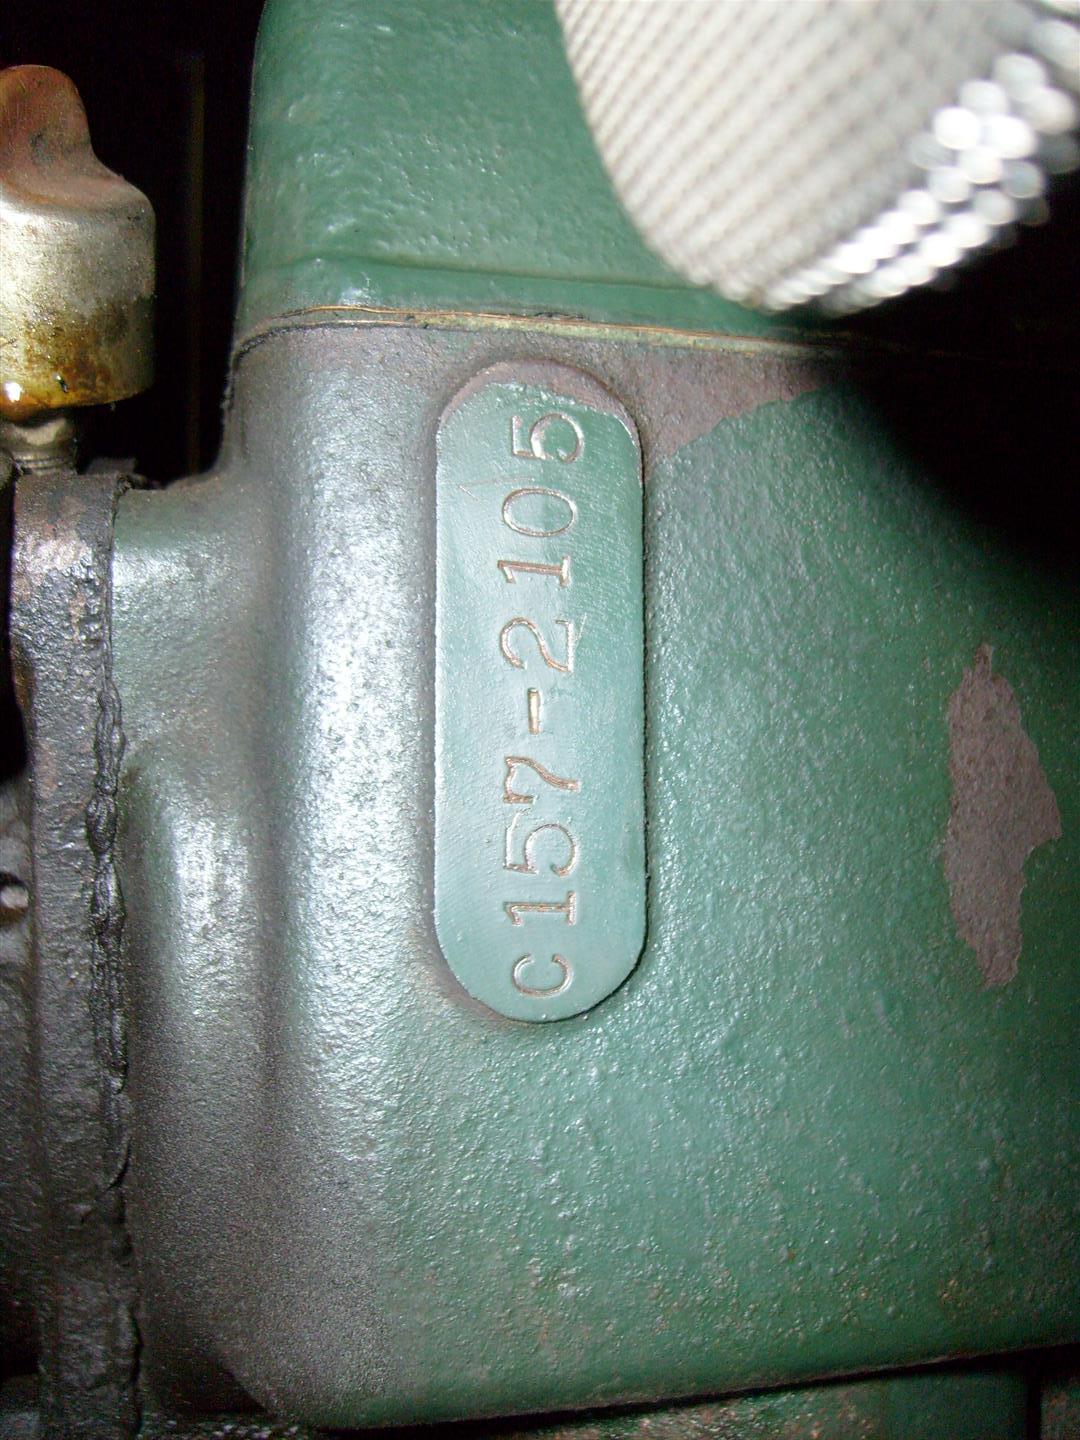 C157-2105 Engine Number